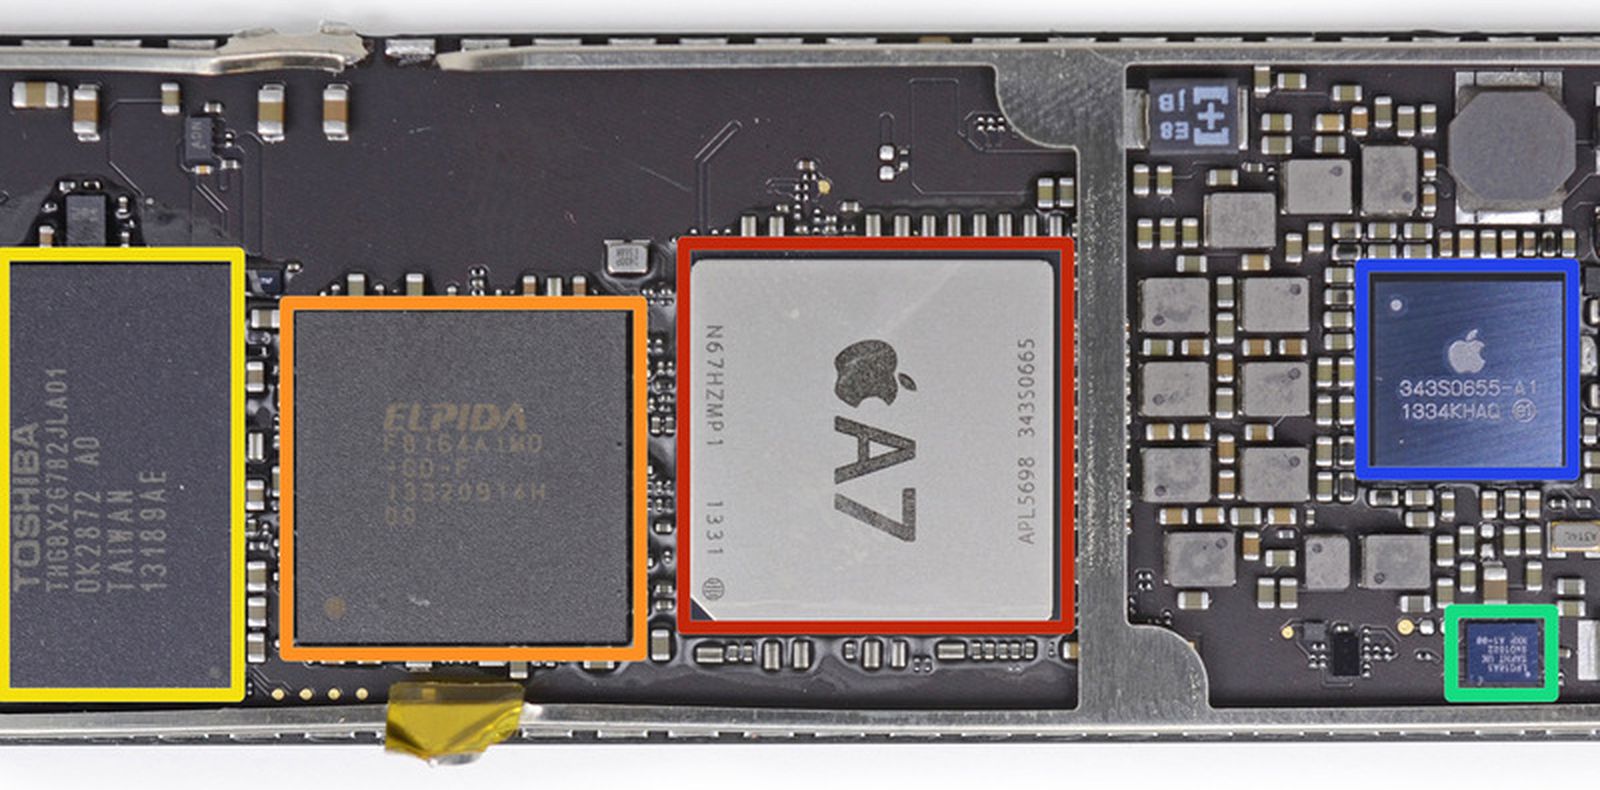 Teardown of iPad Air Reveals A7 Chip, LG Display, Qualcomm LTE